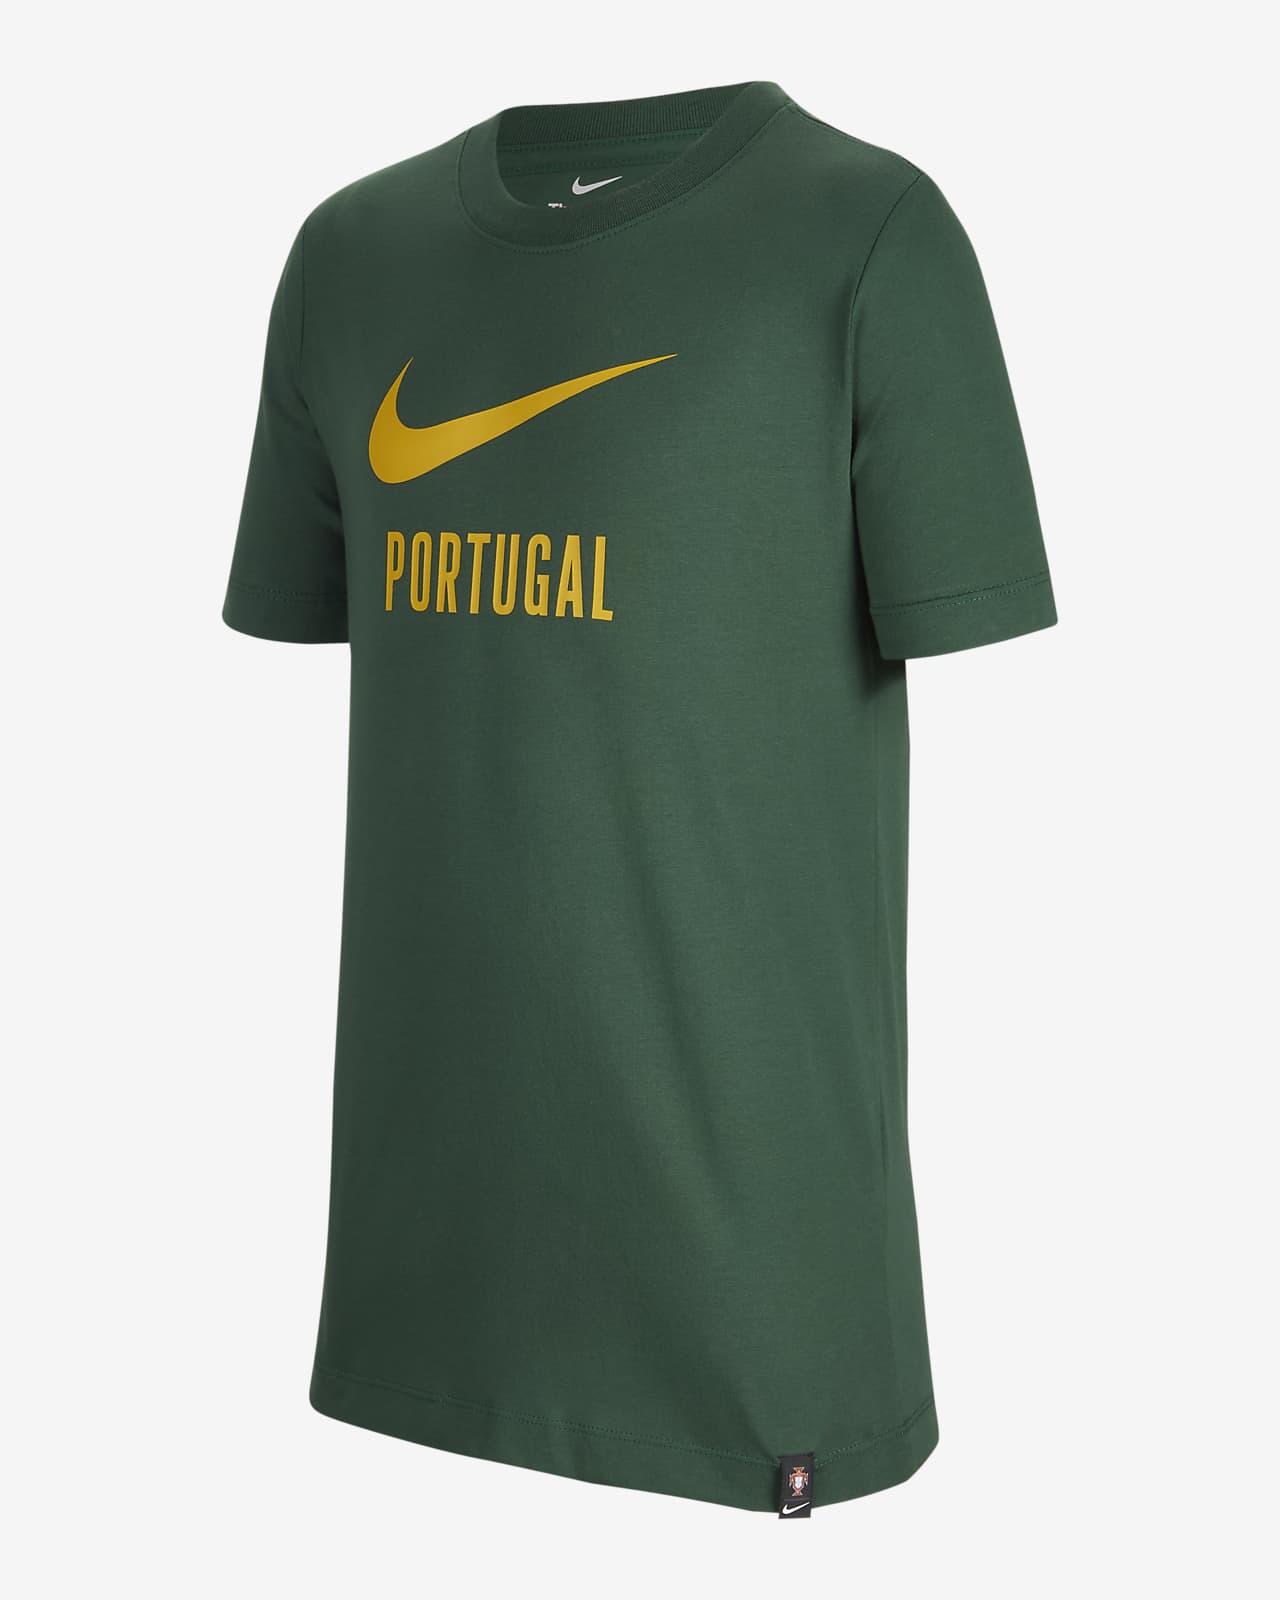 Portugal Swoosh Older Kids' Nike T-Shirt